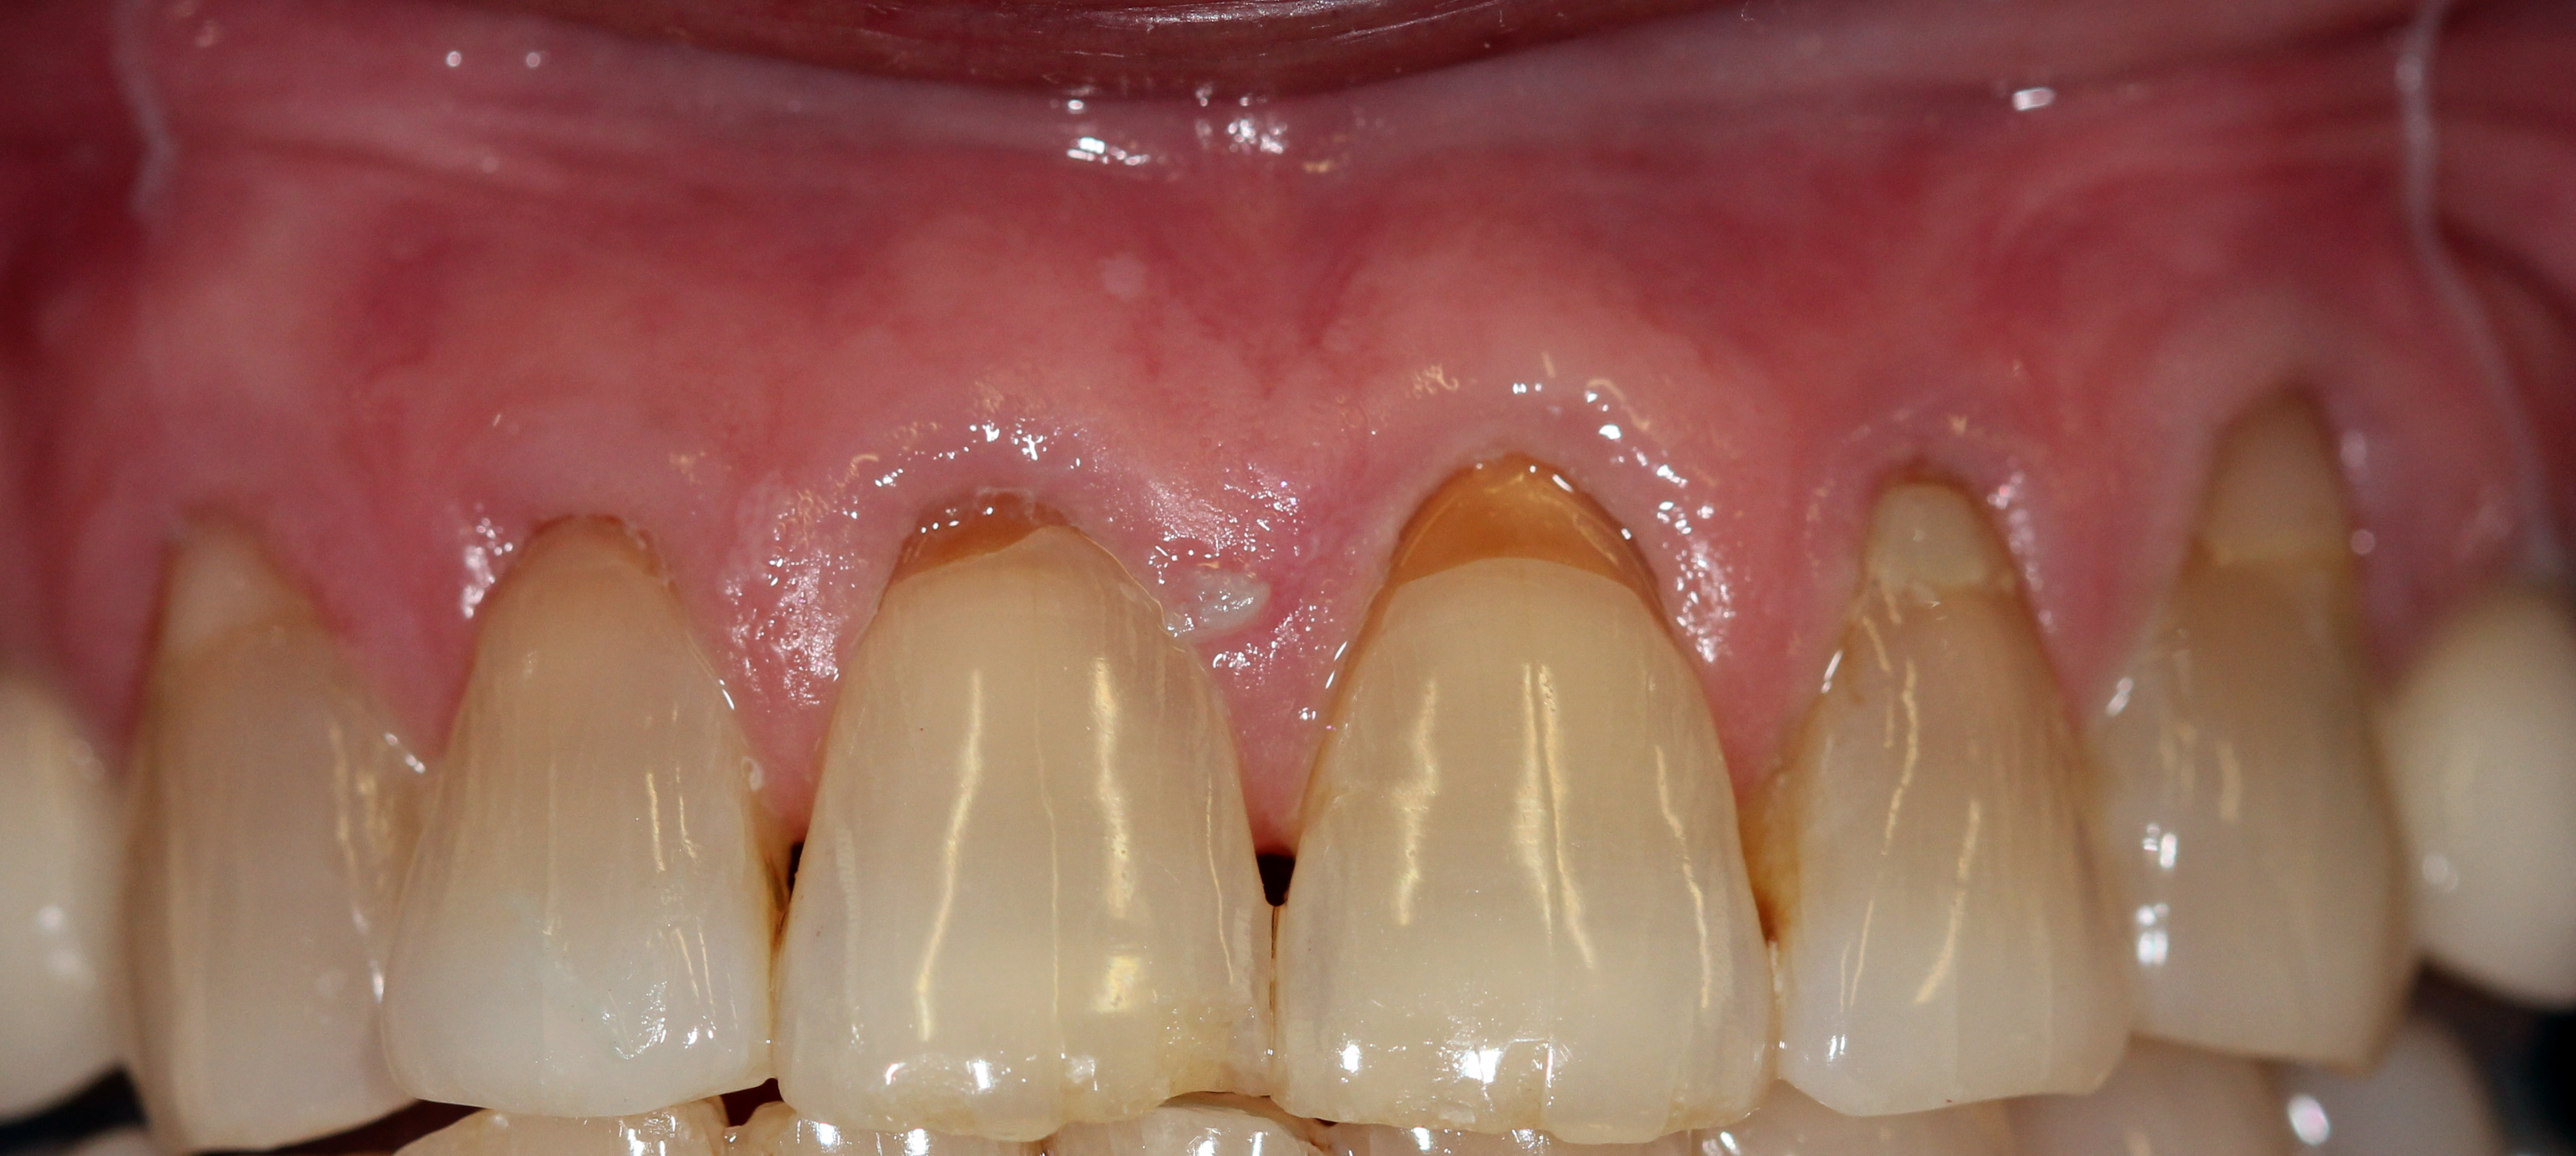 upper anterior teeth  before surgery